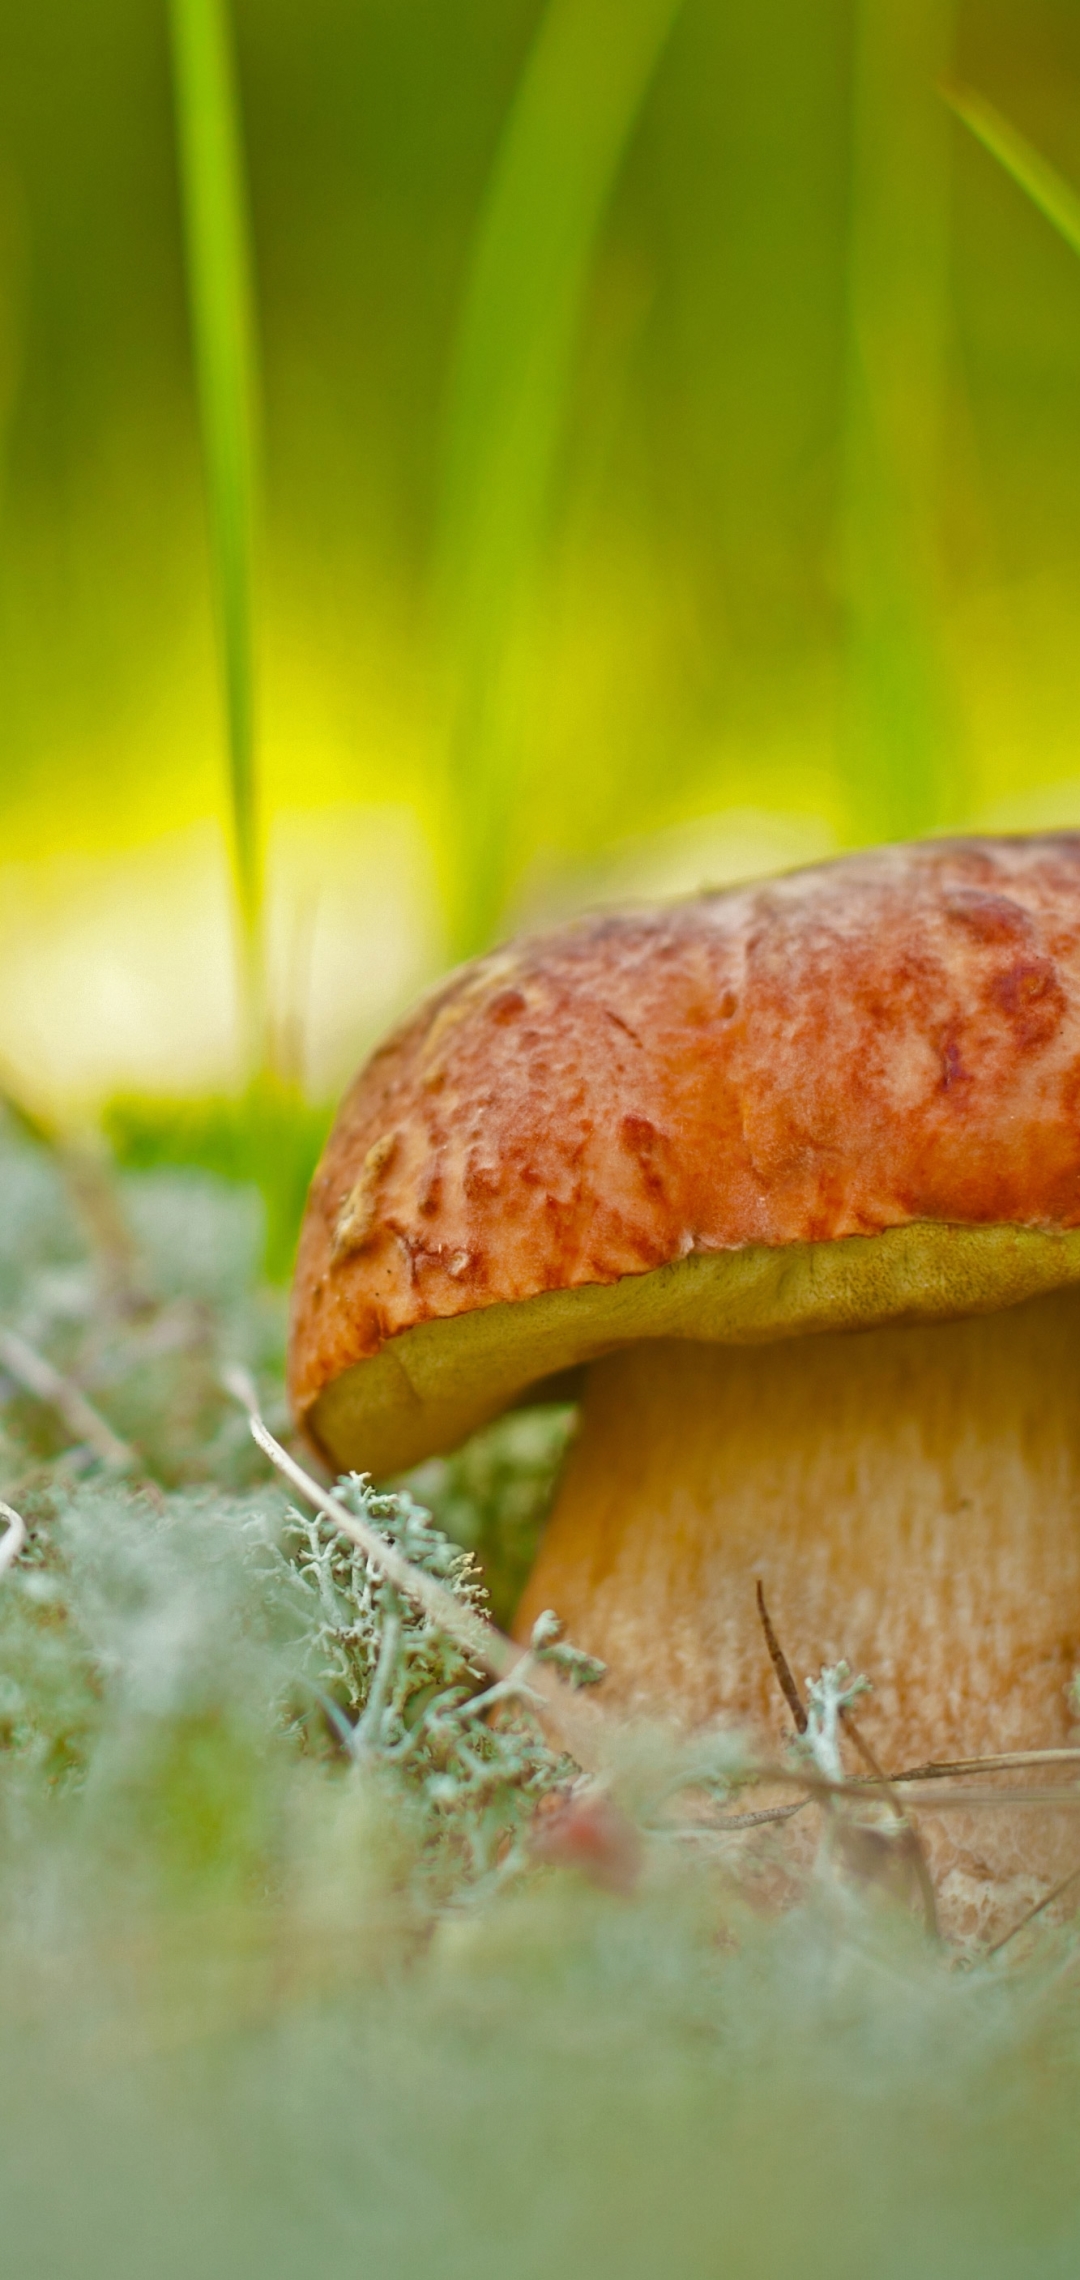 A Porcini mushroom by Vnosokin